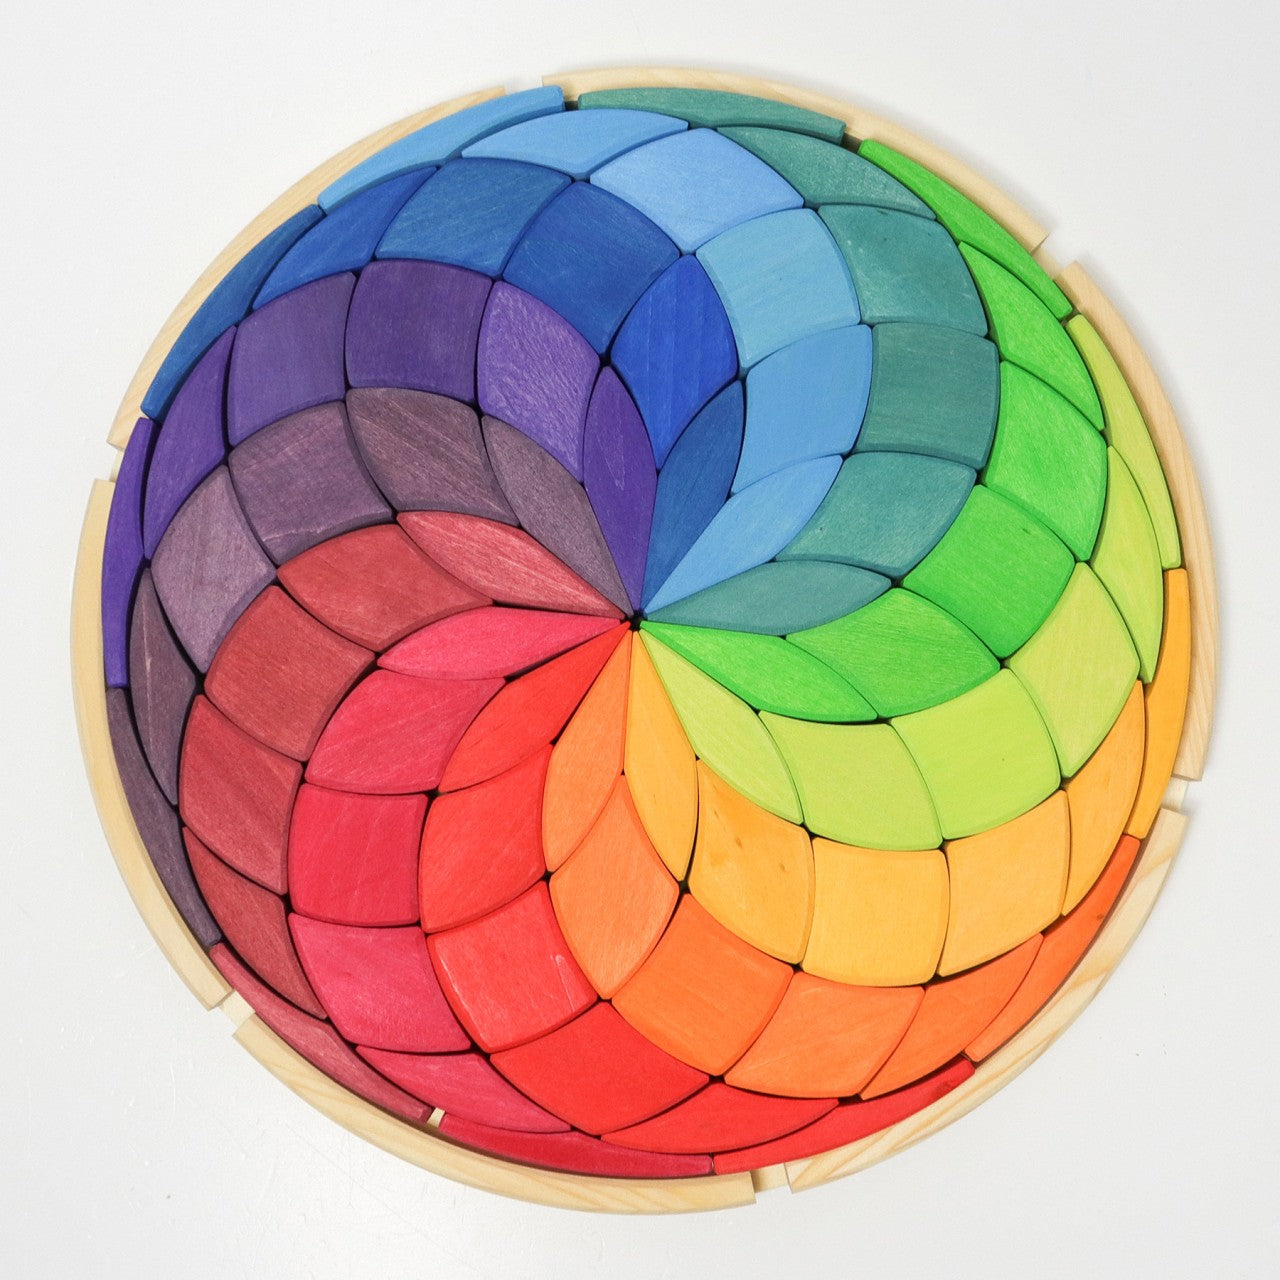 Grimm's large colour spiral